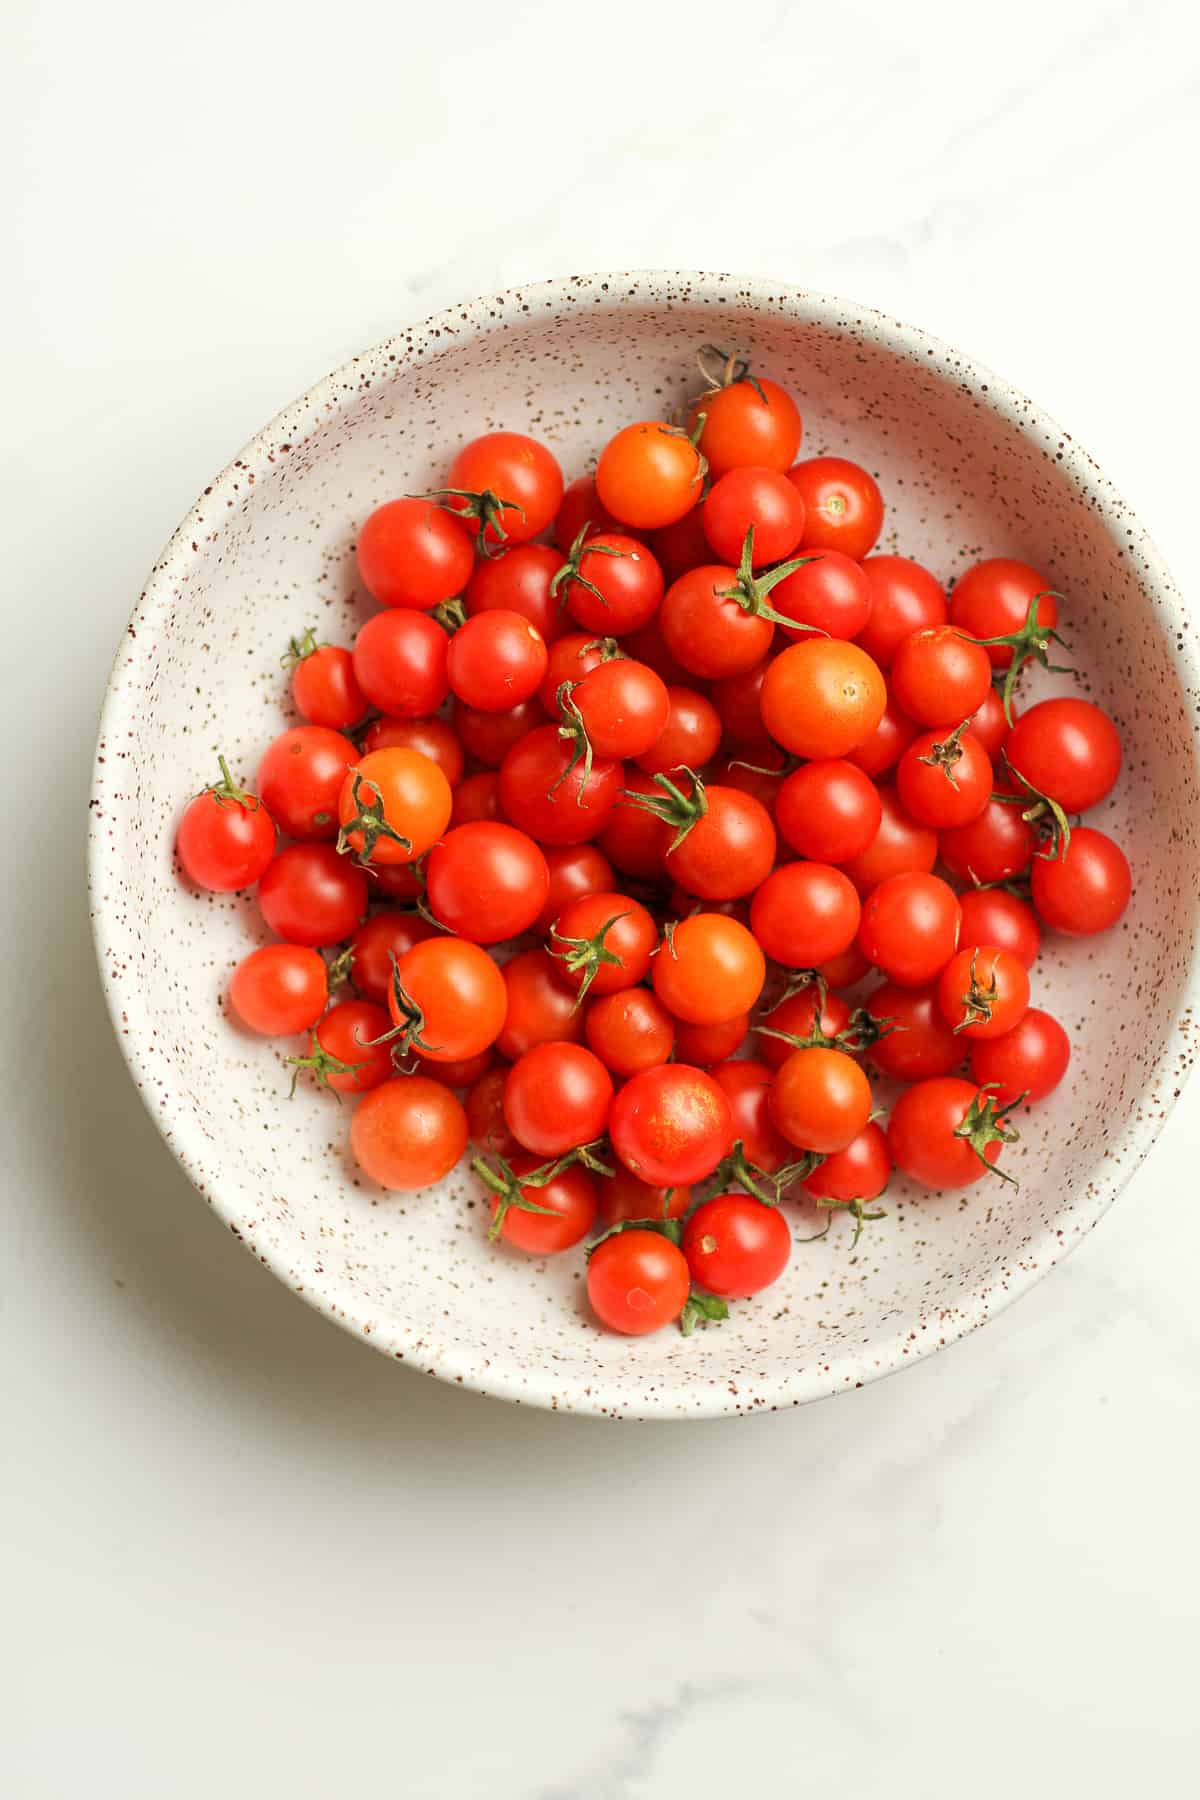 A bowl of garden fresh cherry tomatoes.